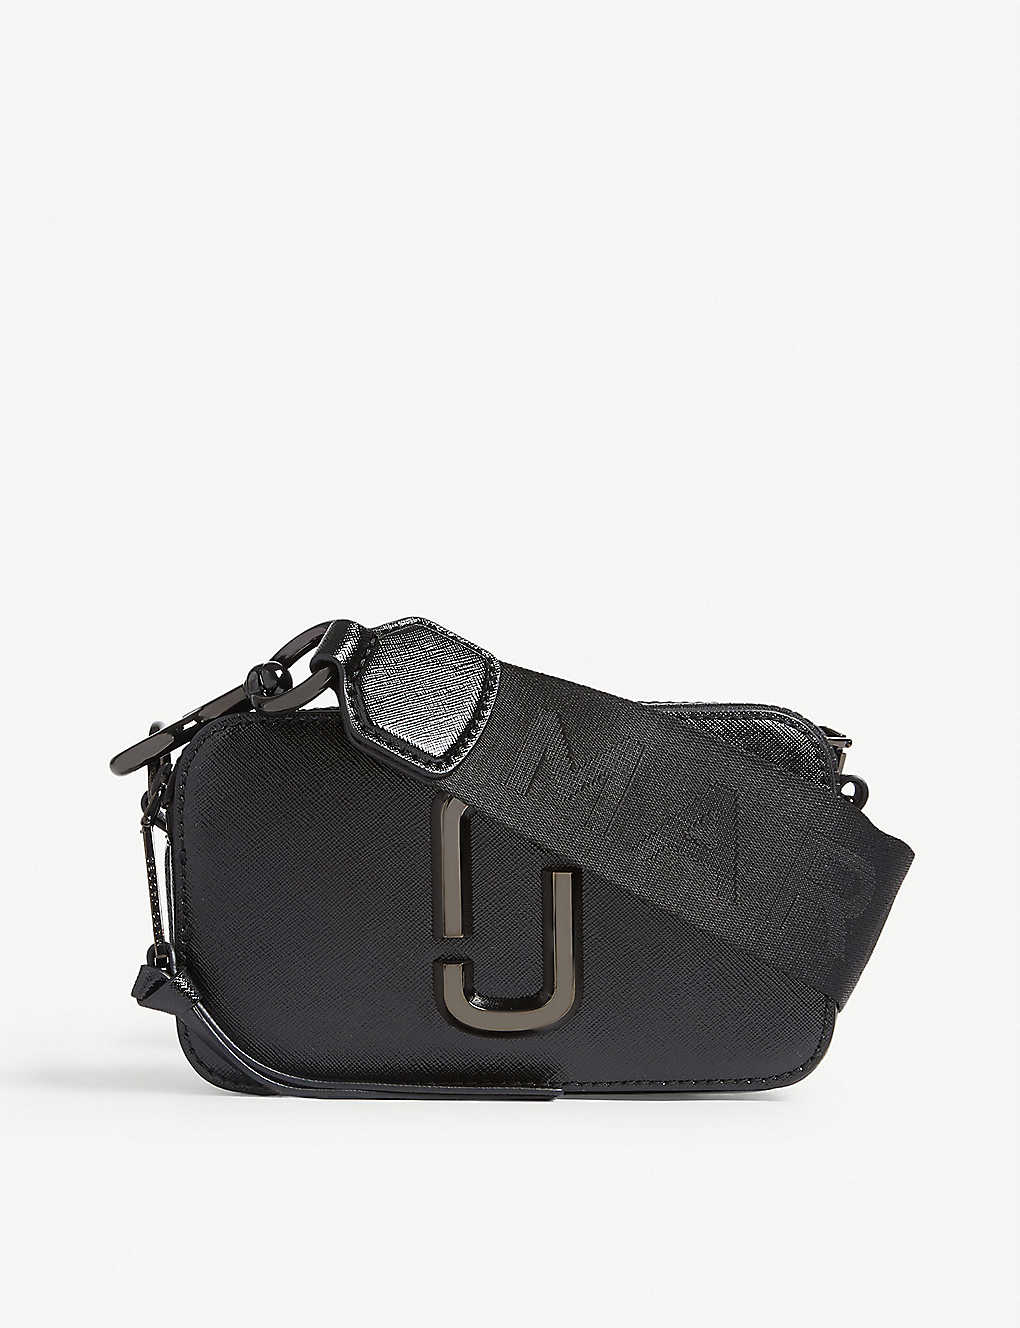 Marc Jacobs The Snapshot Crossbody Bag